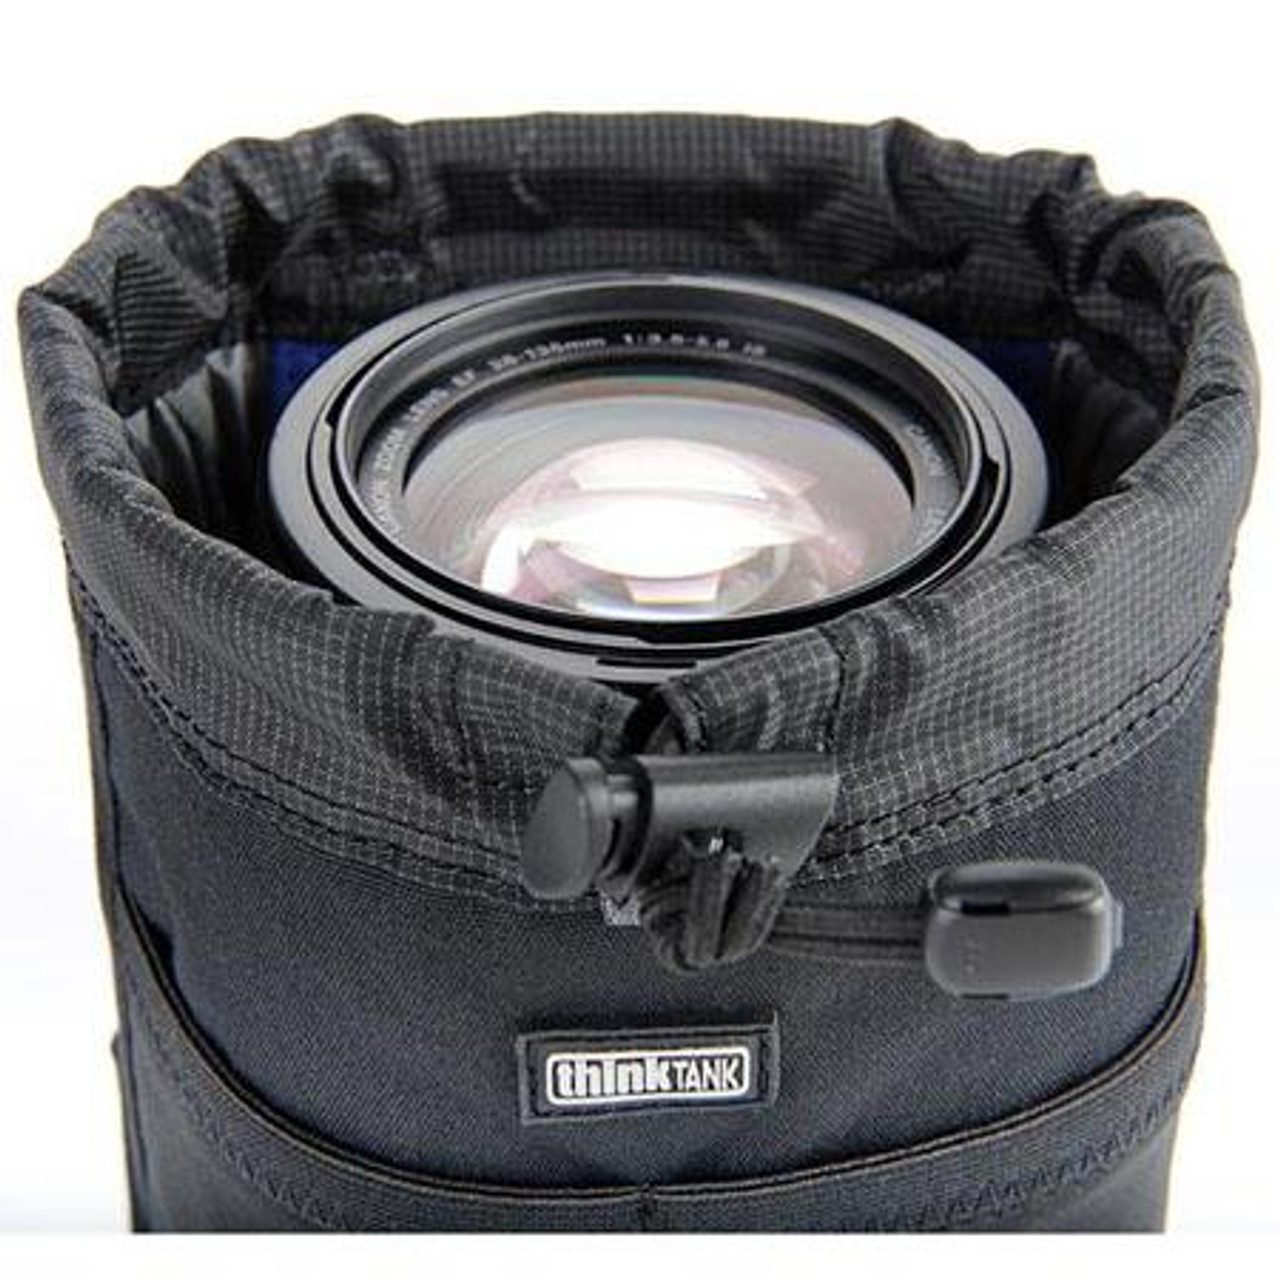 lens pouch belt